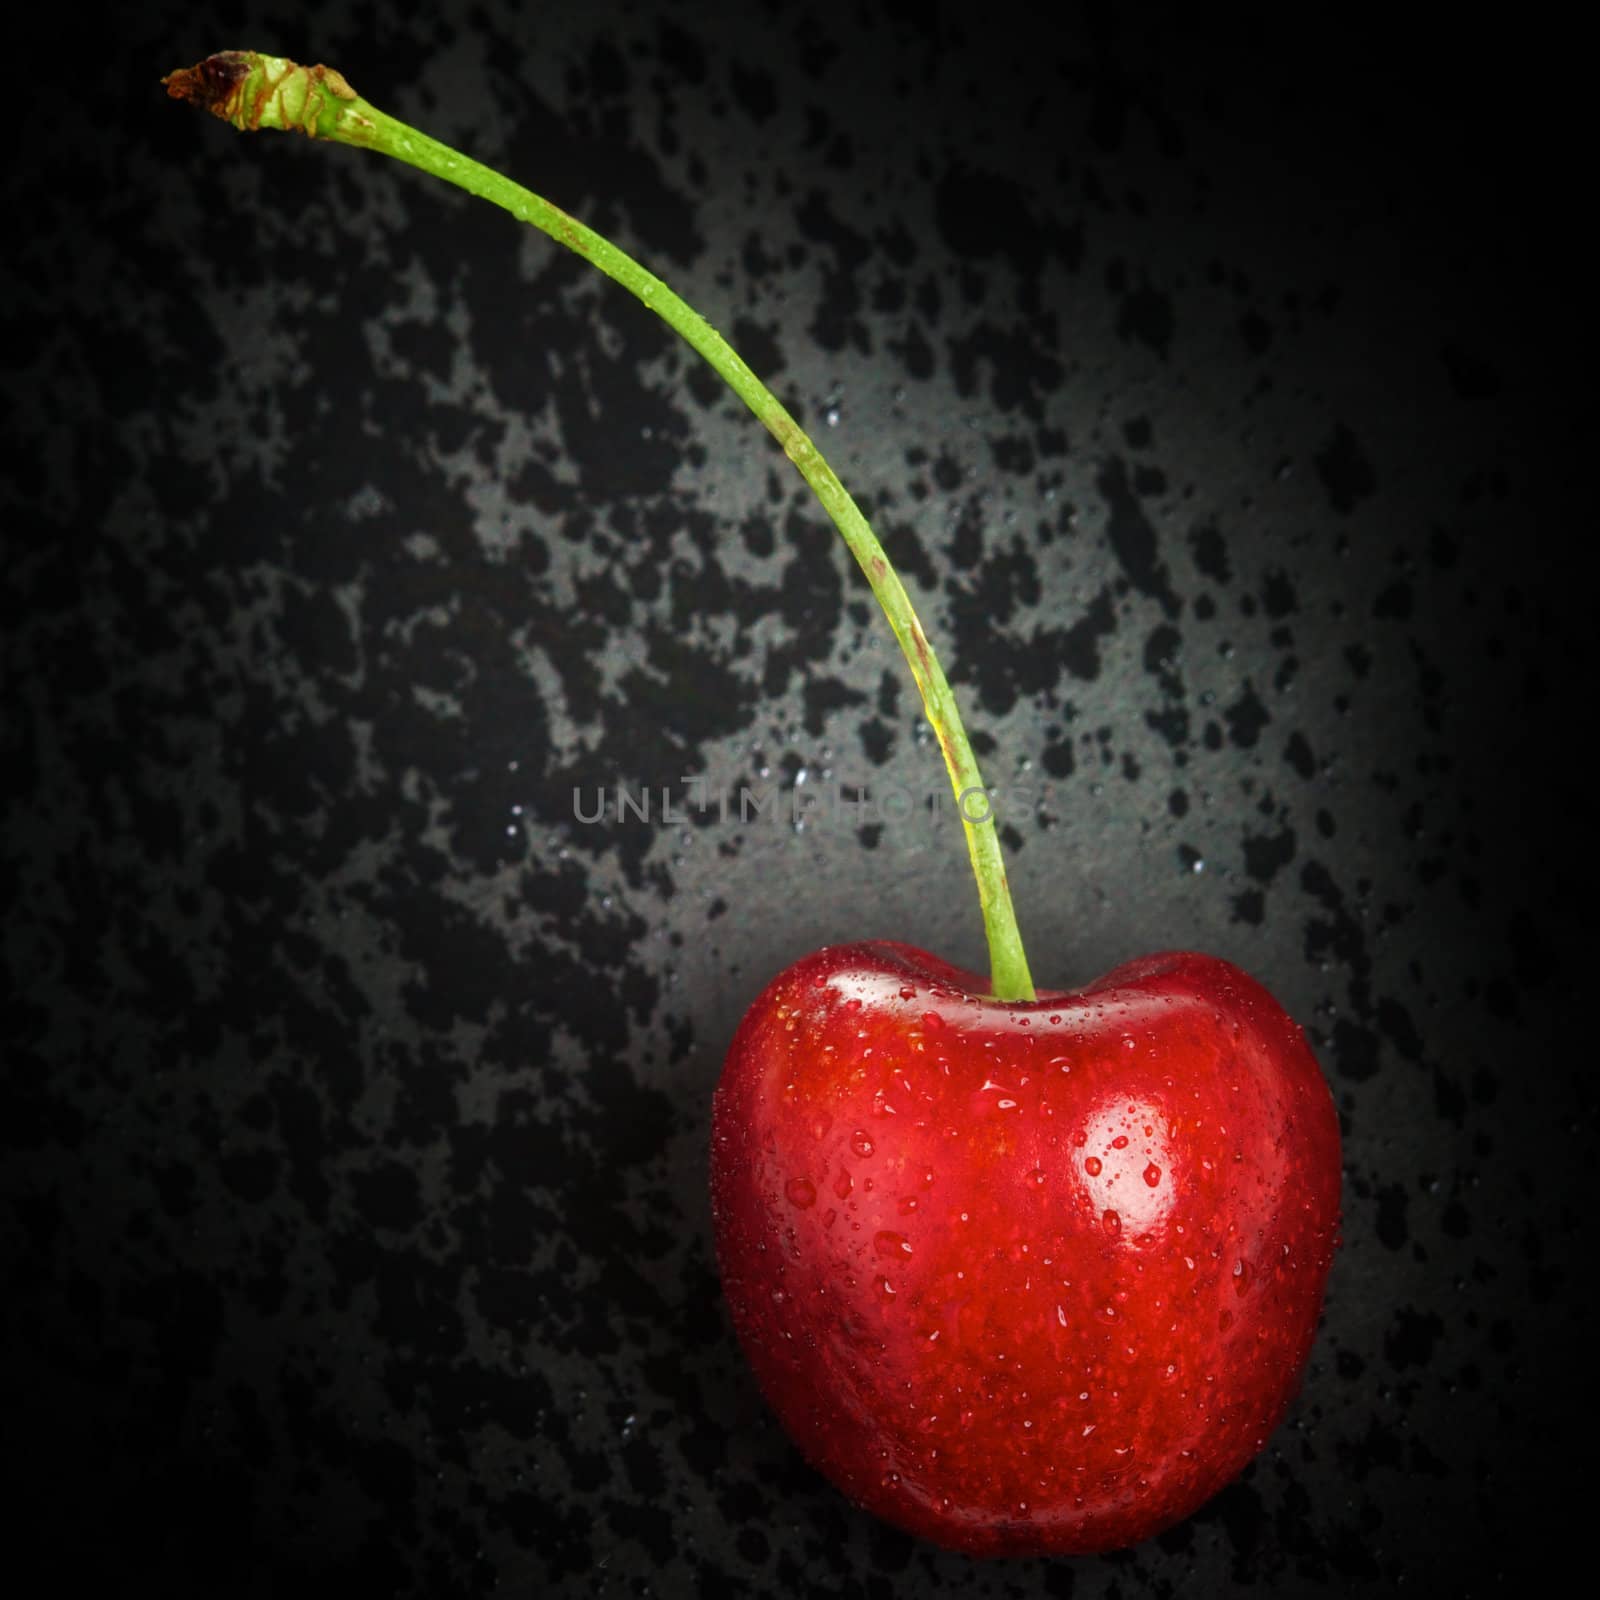 fresh red cherry lying on black background